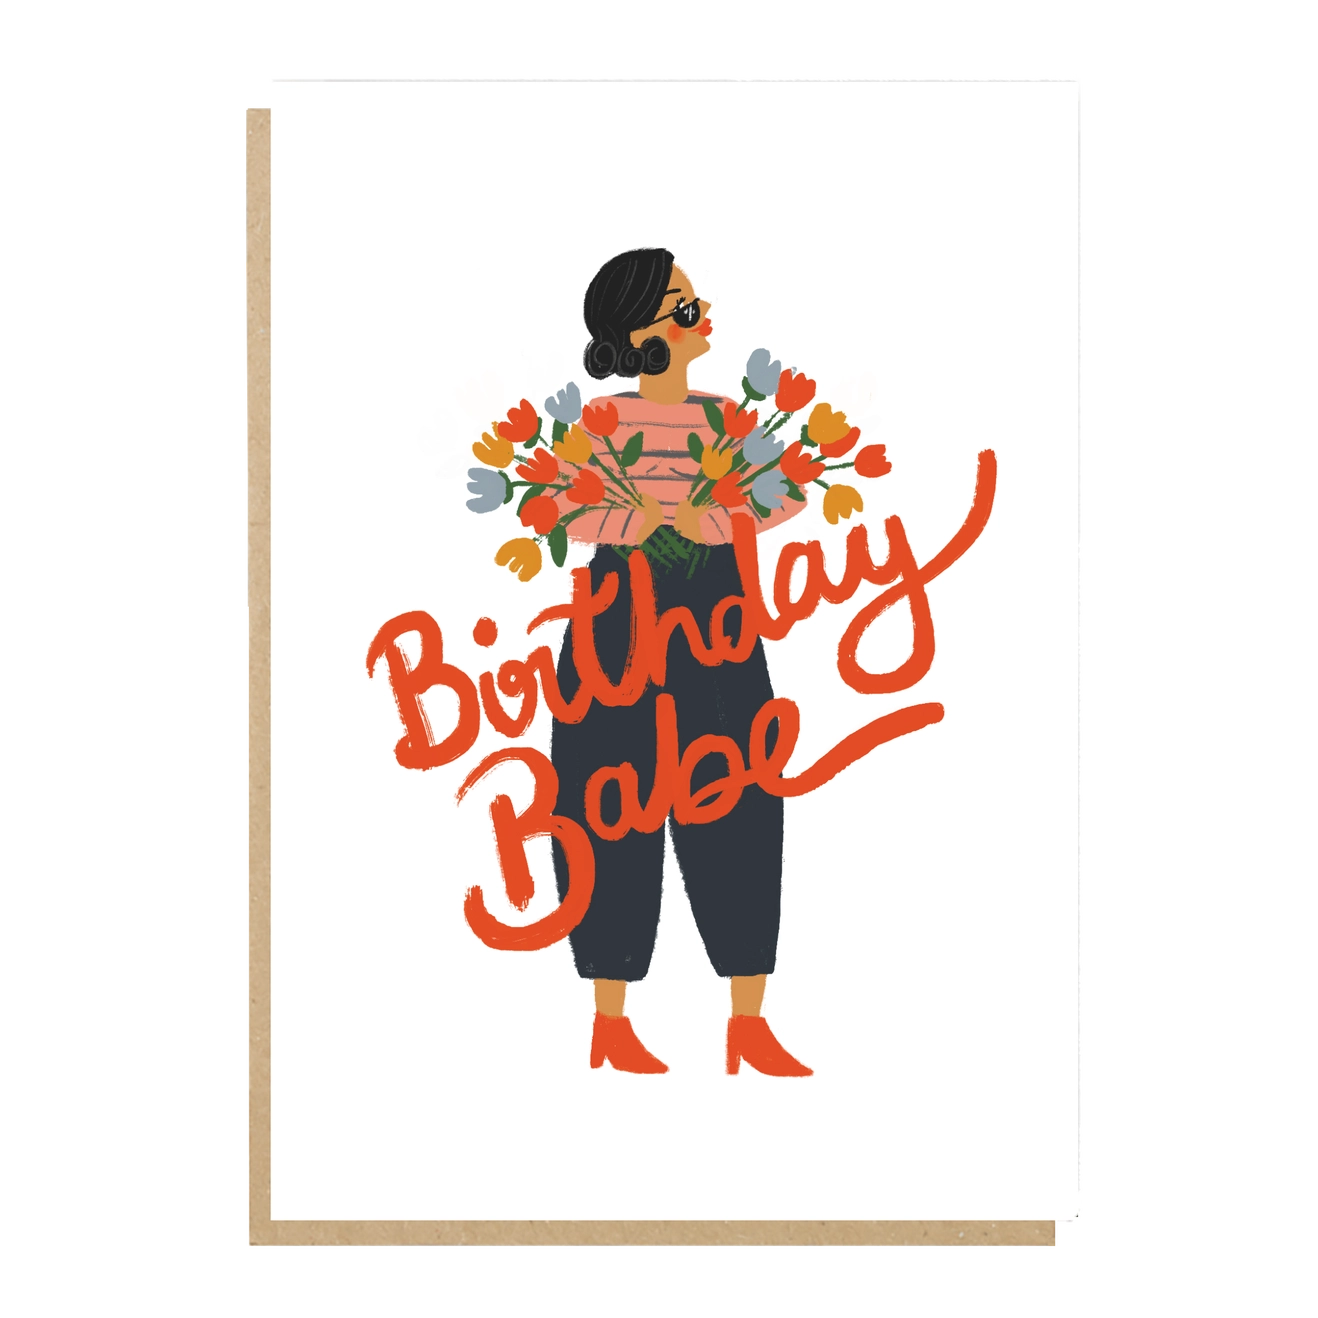 Birthday Babe Birthday Card